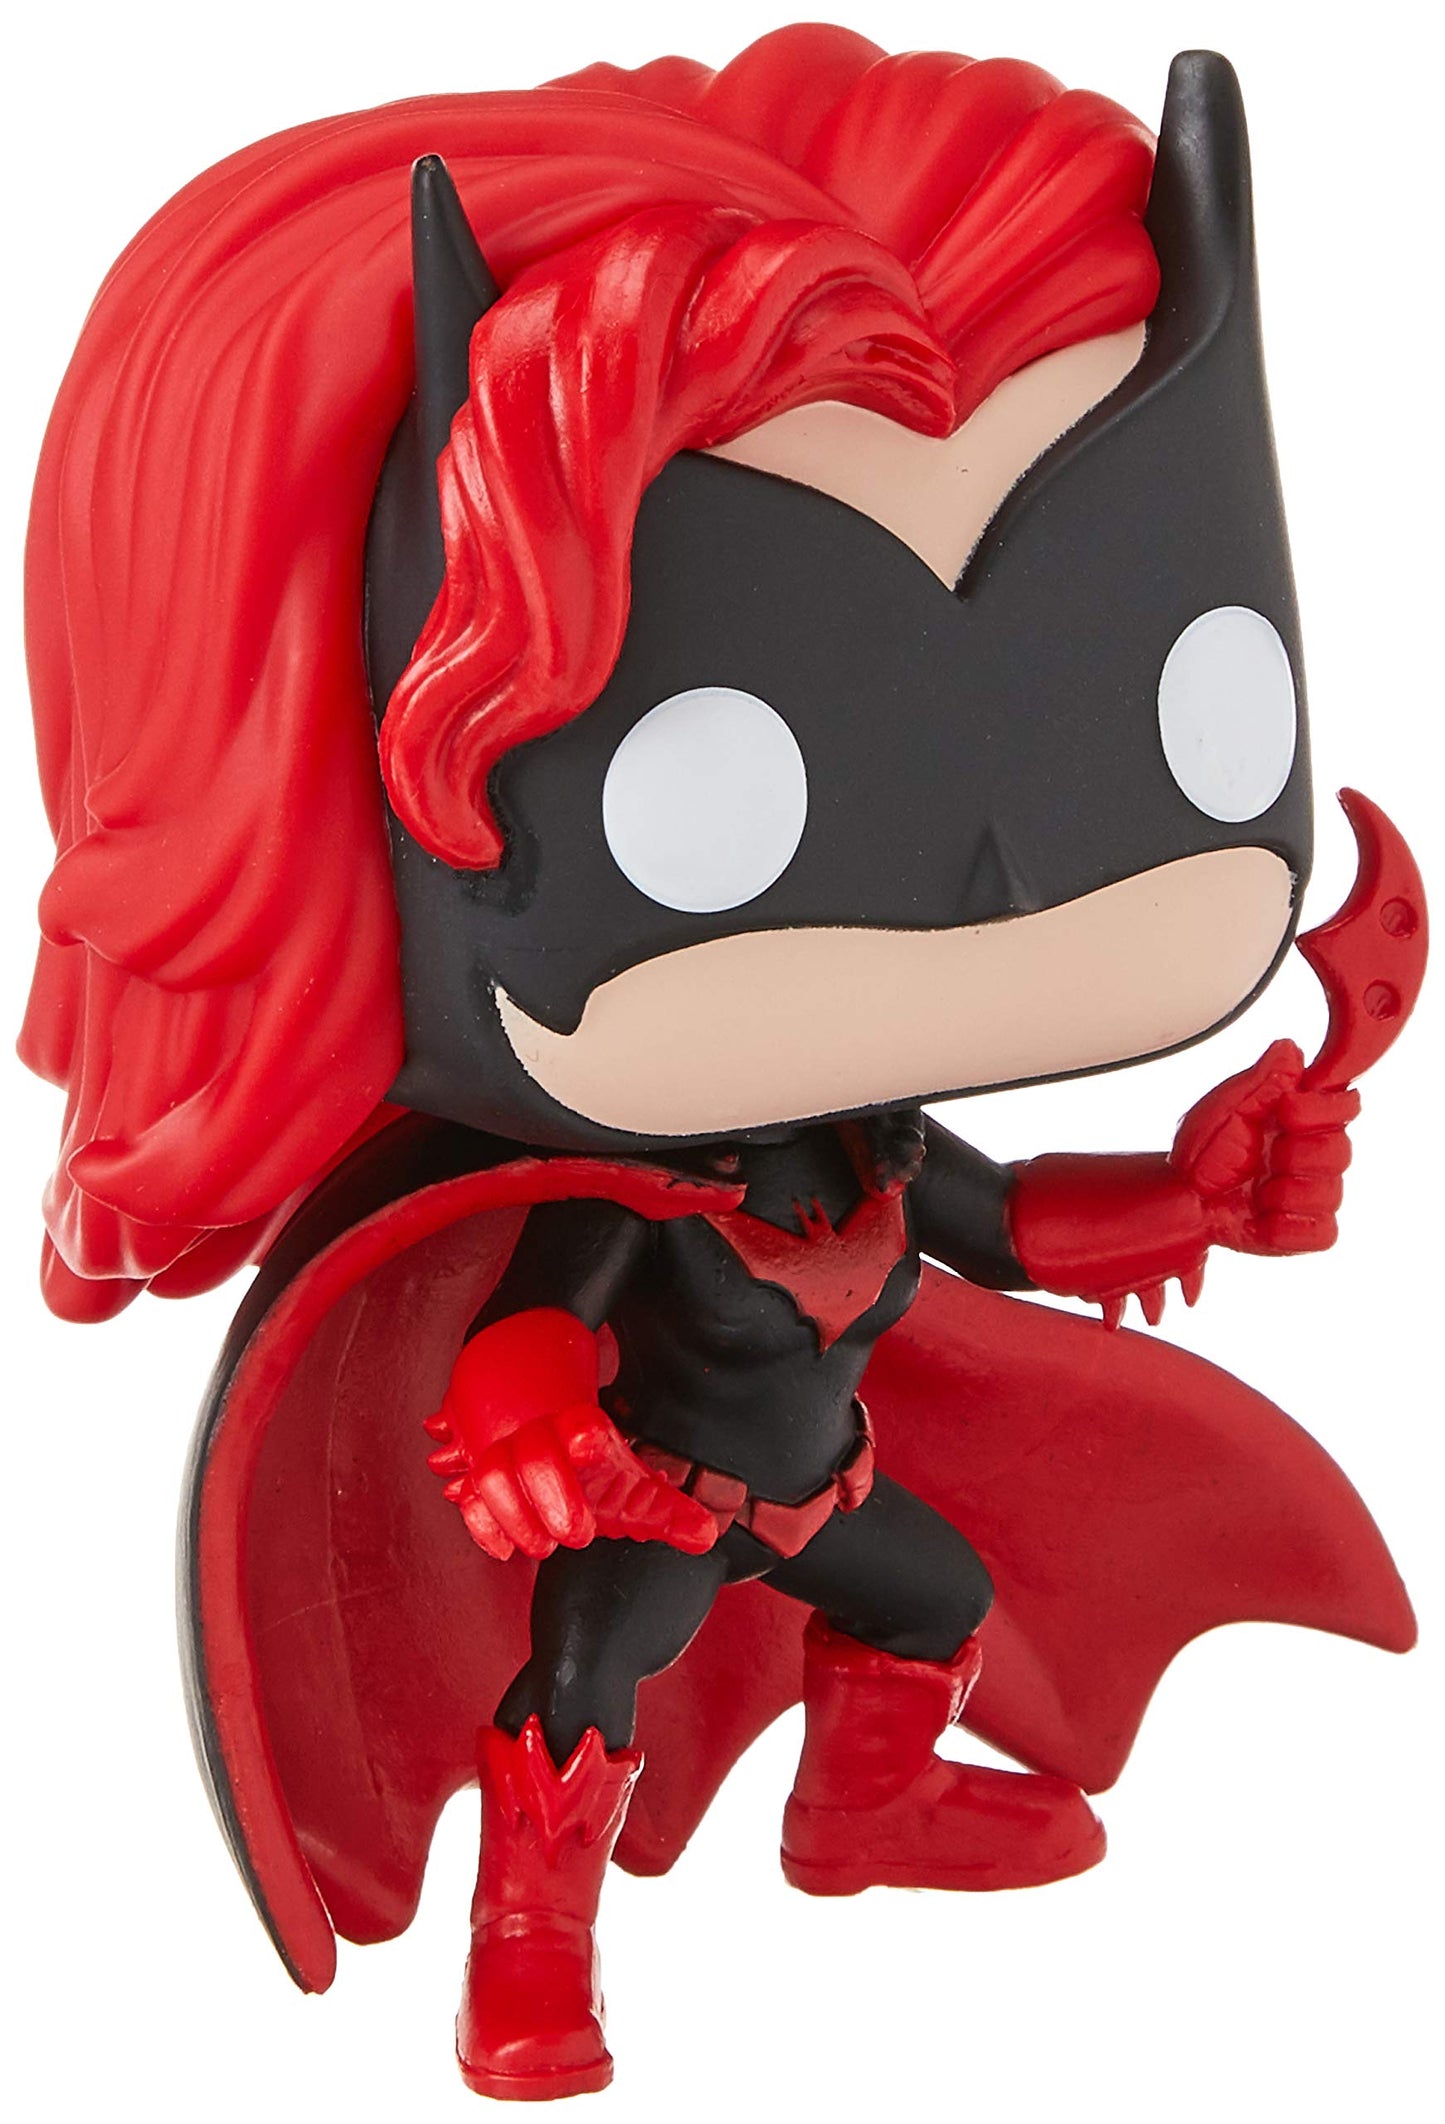 Funko POP! DC Heroes Batwoman